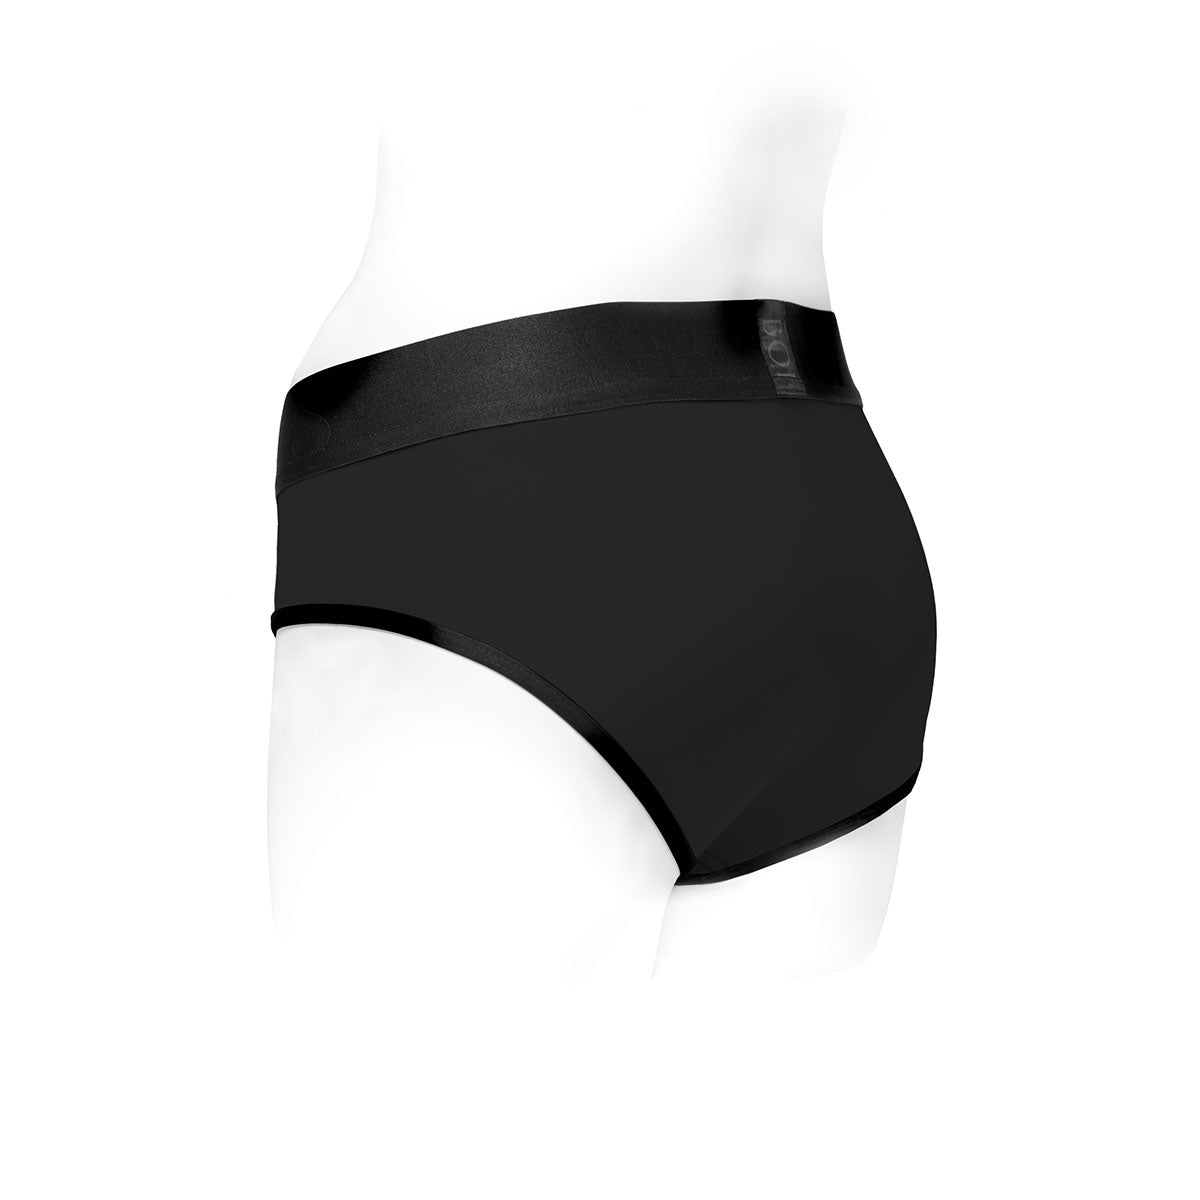 SpareParts Tomboi Harness Black/Black Nylon - 3X